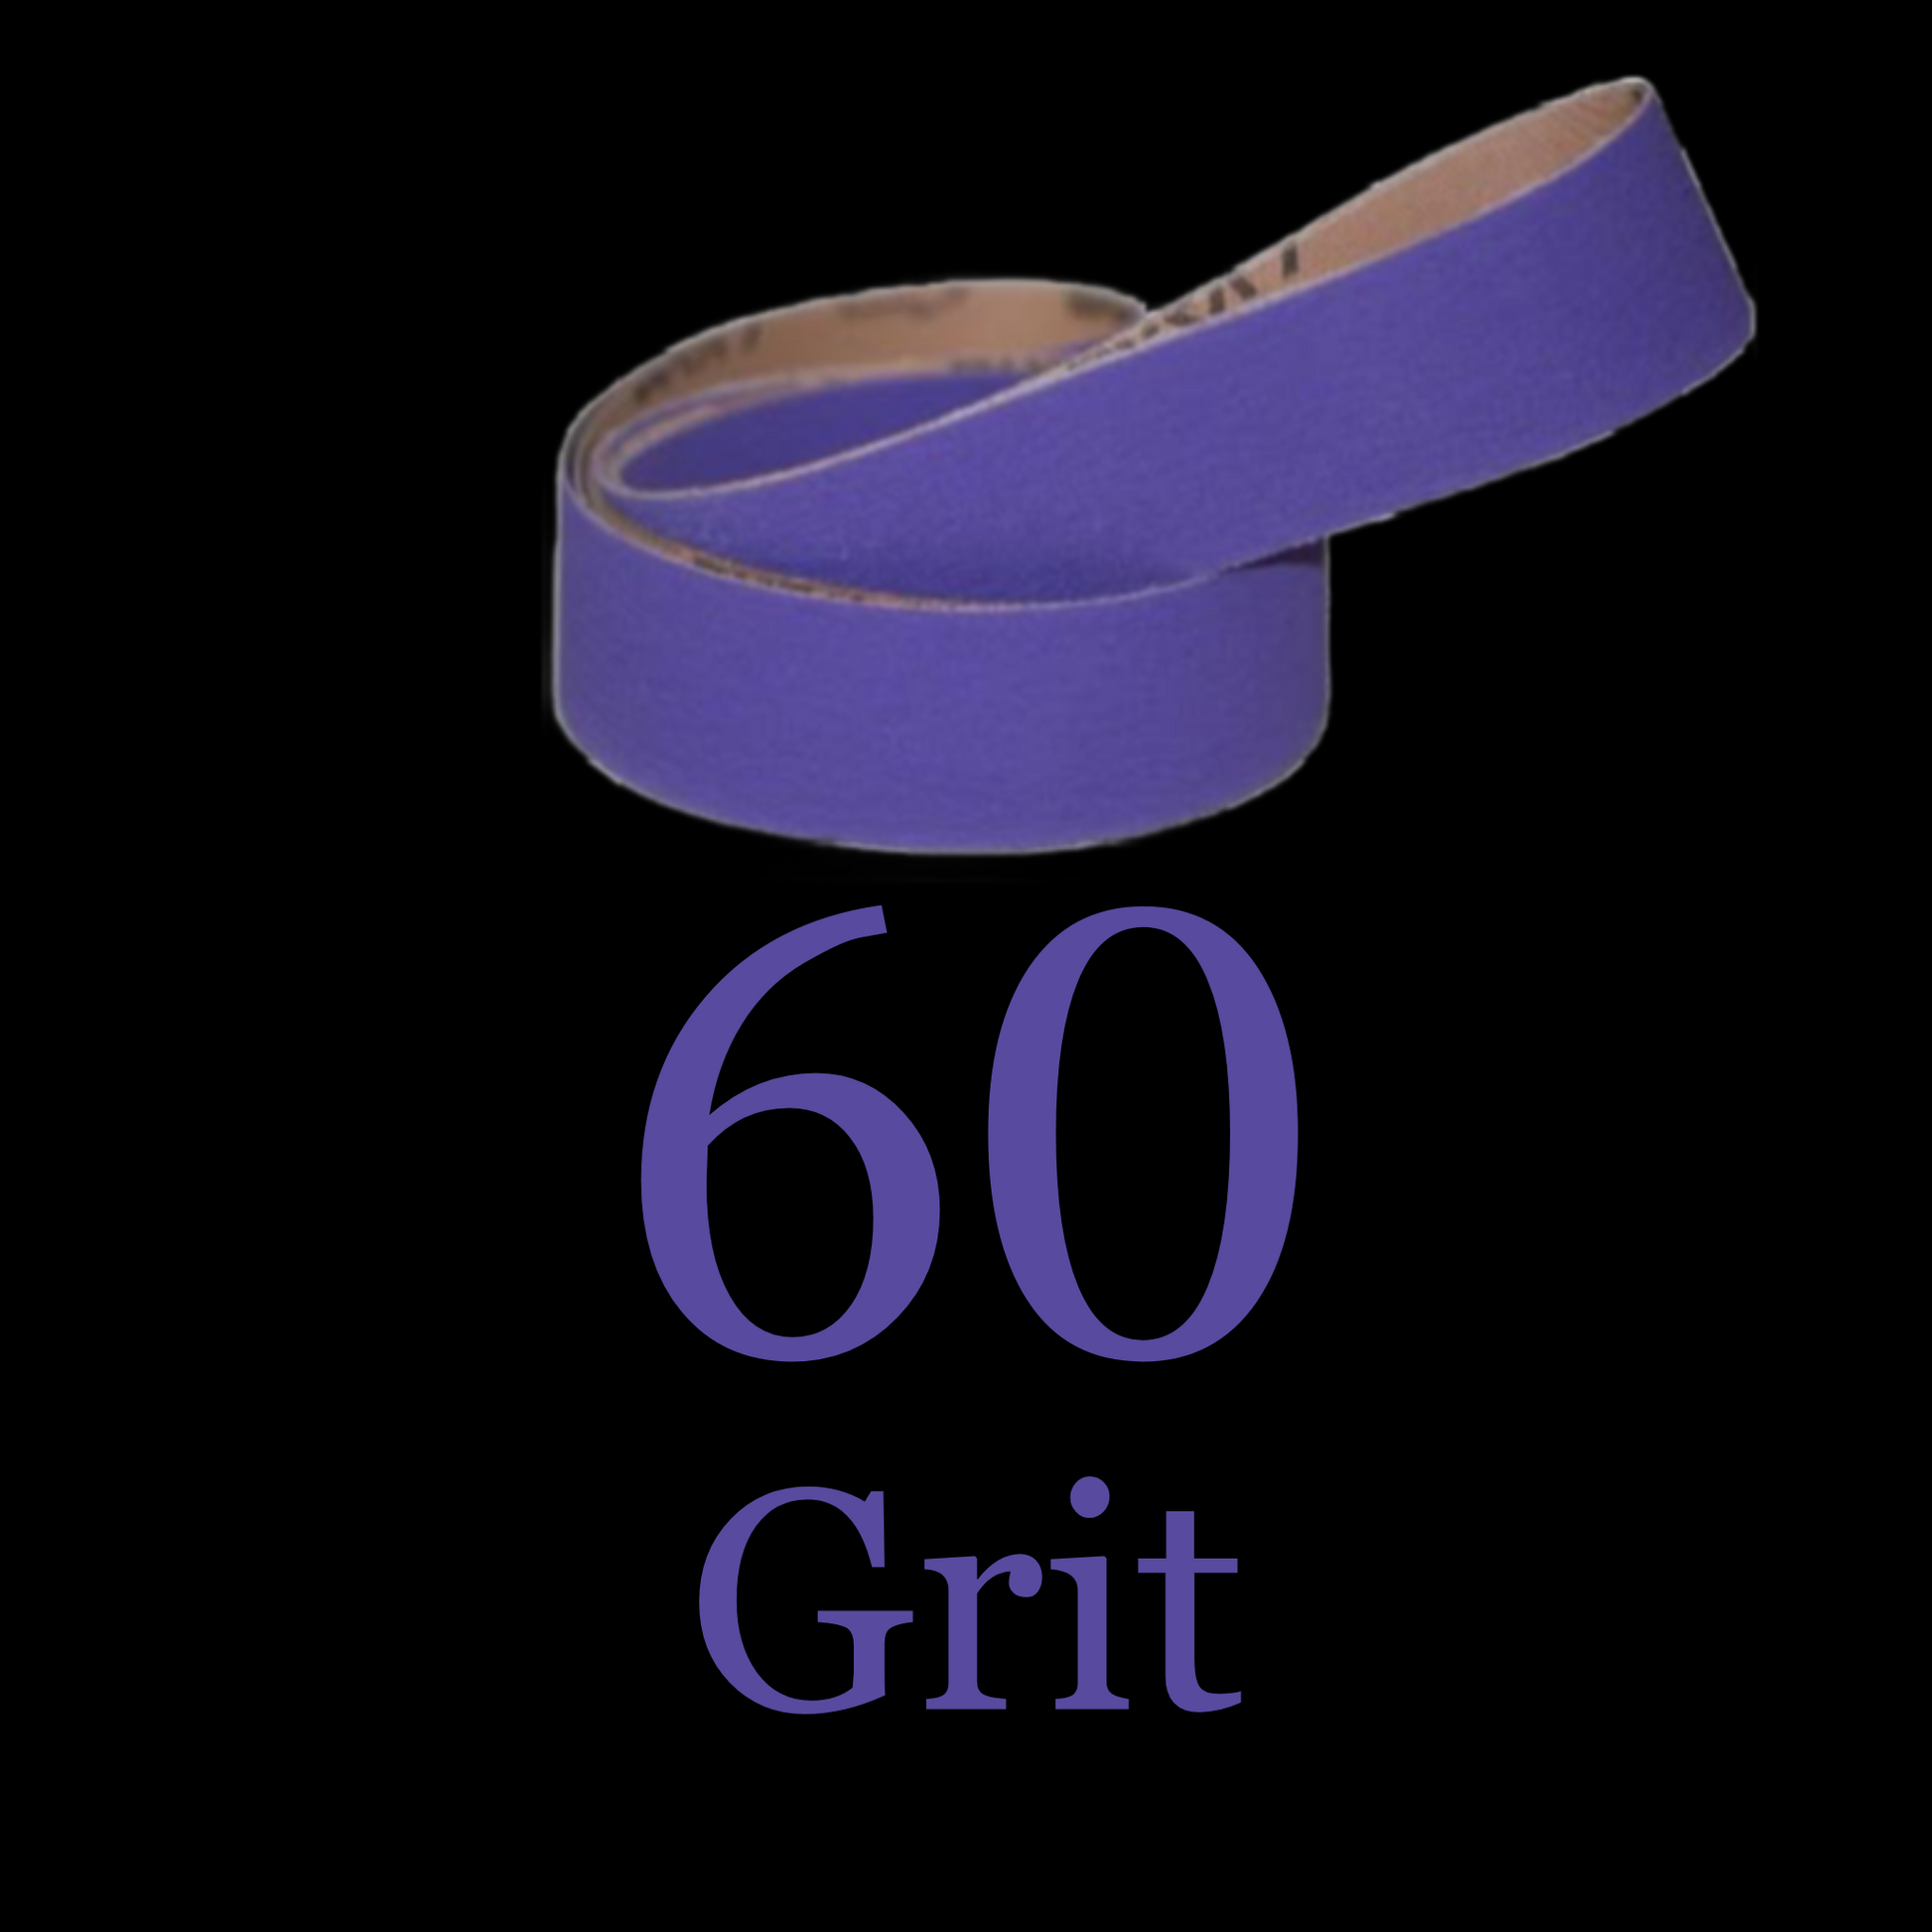 2” x 72” Reglite Premium Ceramic Belts 60 Grit